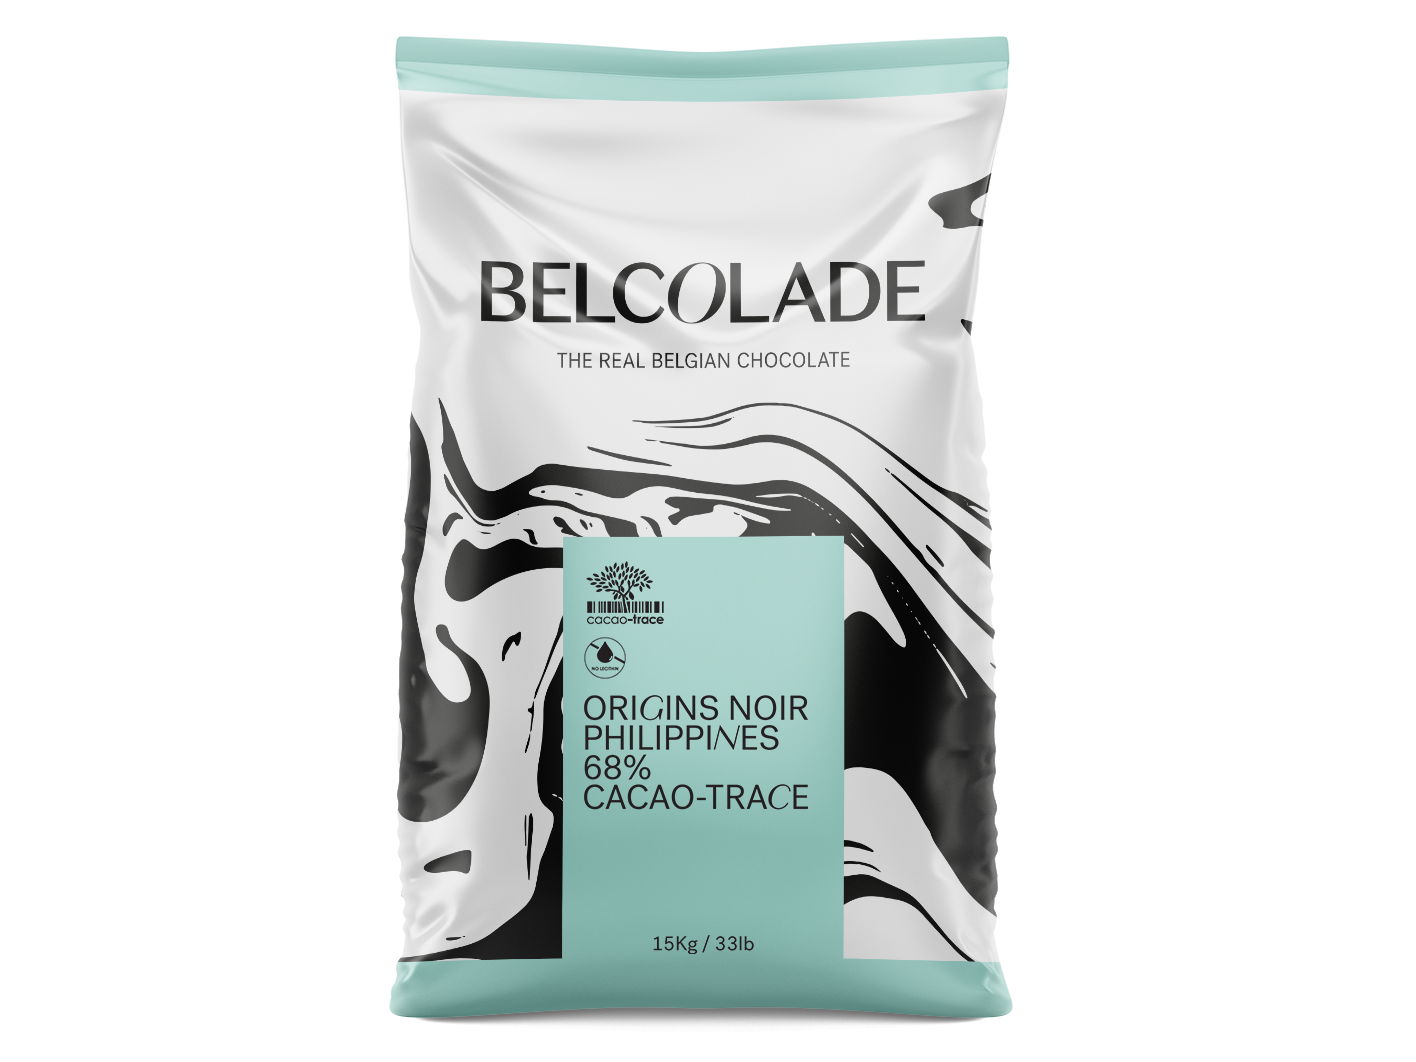 Belcolade origins noir philippines 68% cacao-trace